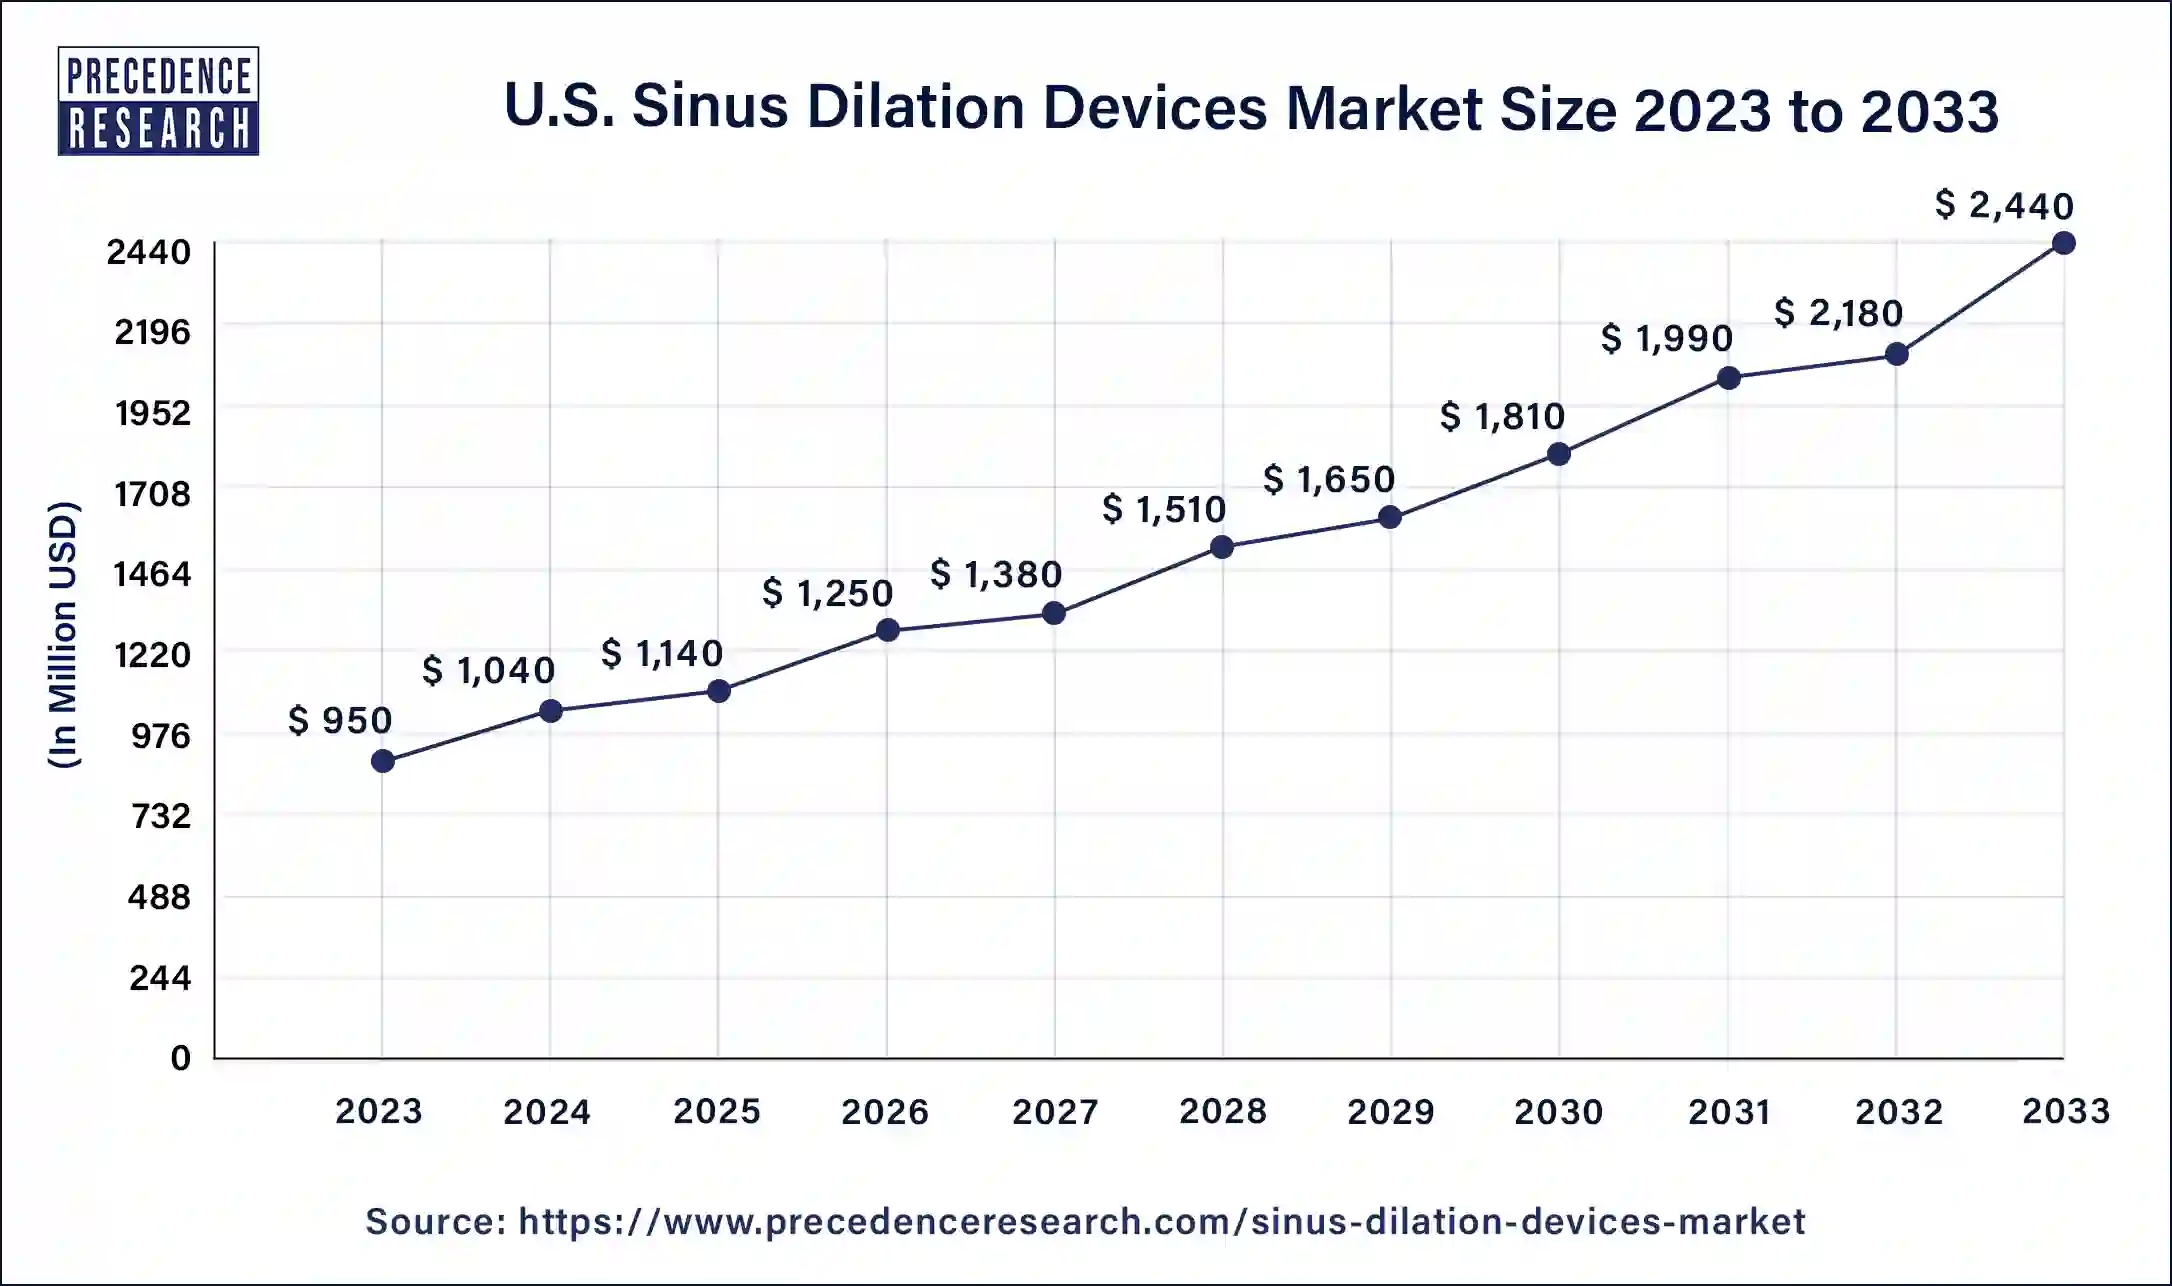 U.S. Sinus Dilation Devices Market Size 2024 to 2033